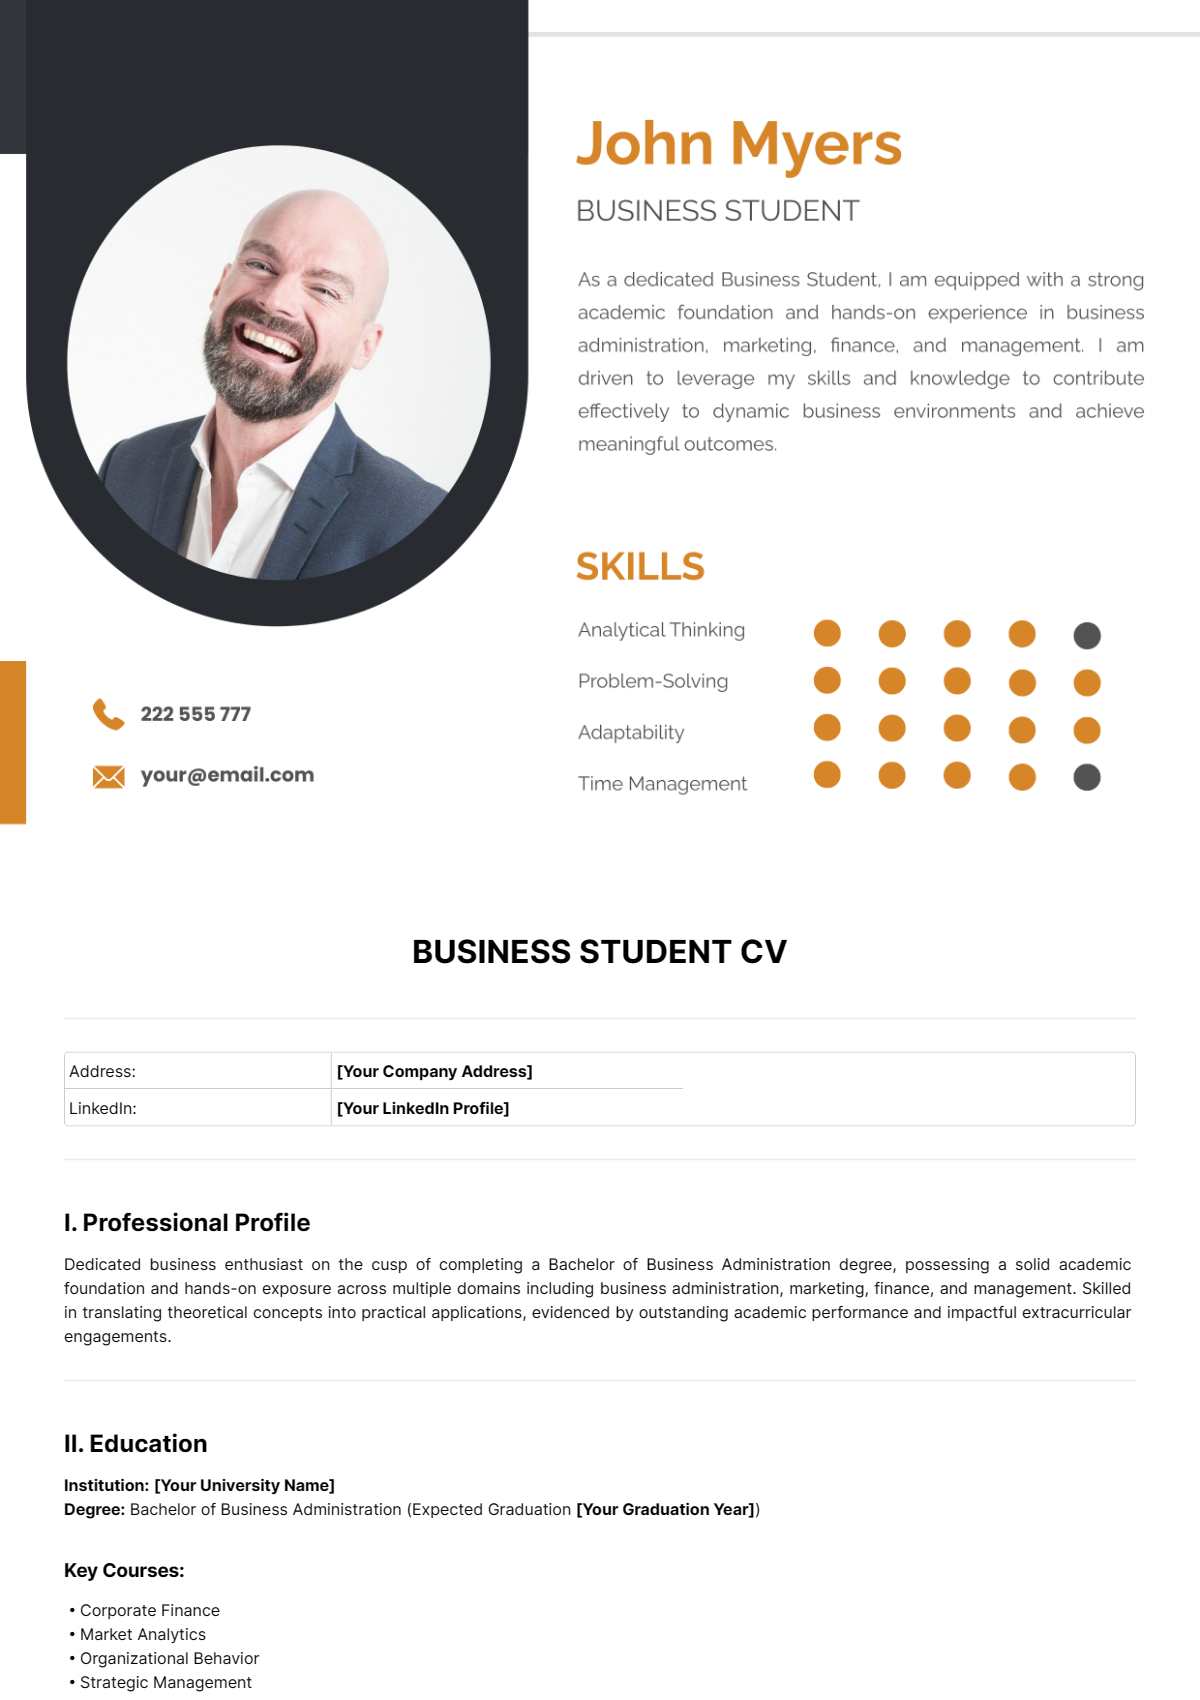 Business Student CV Template